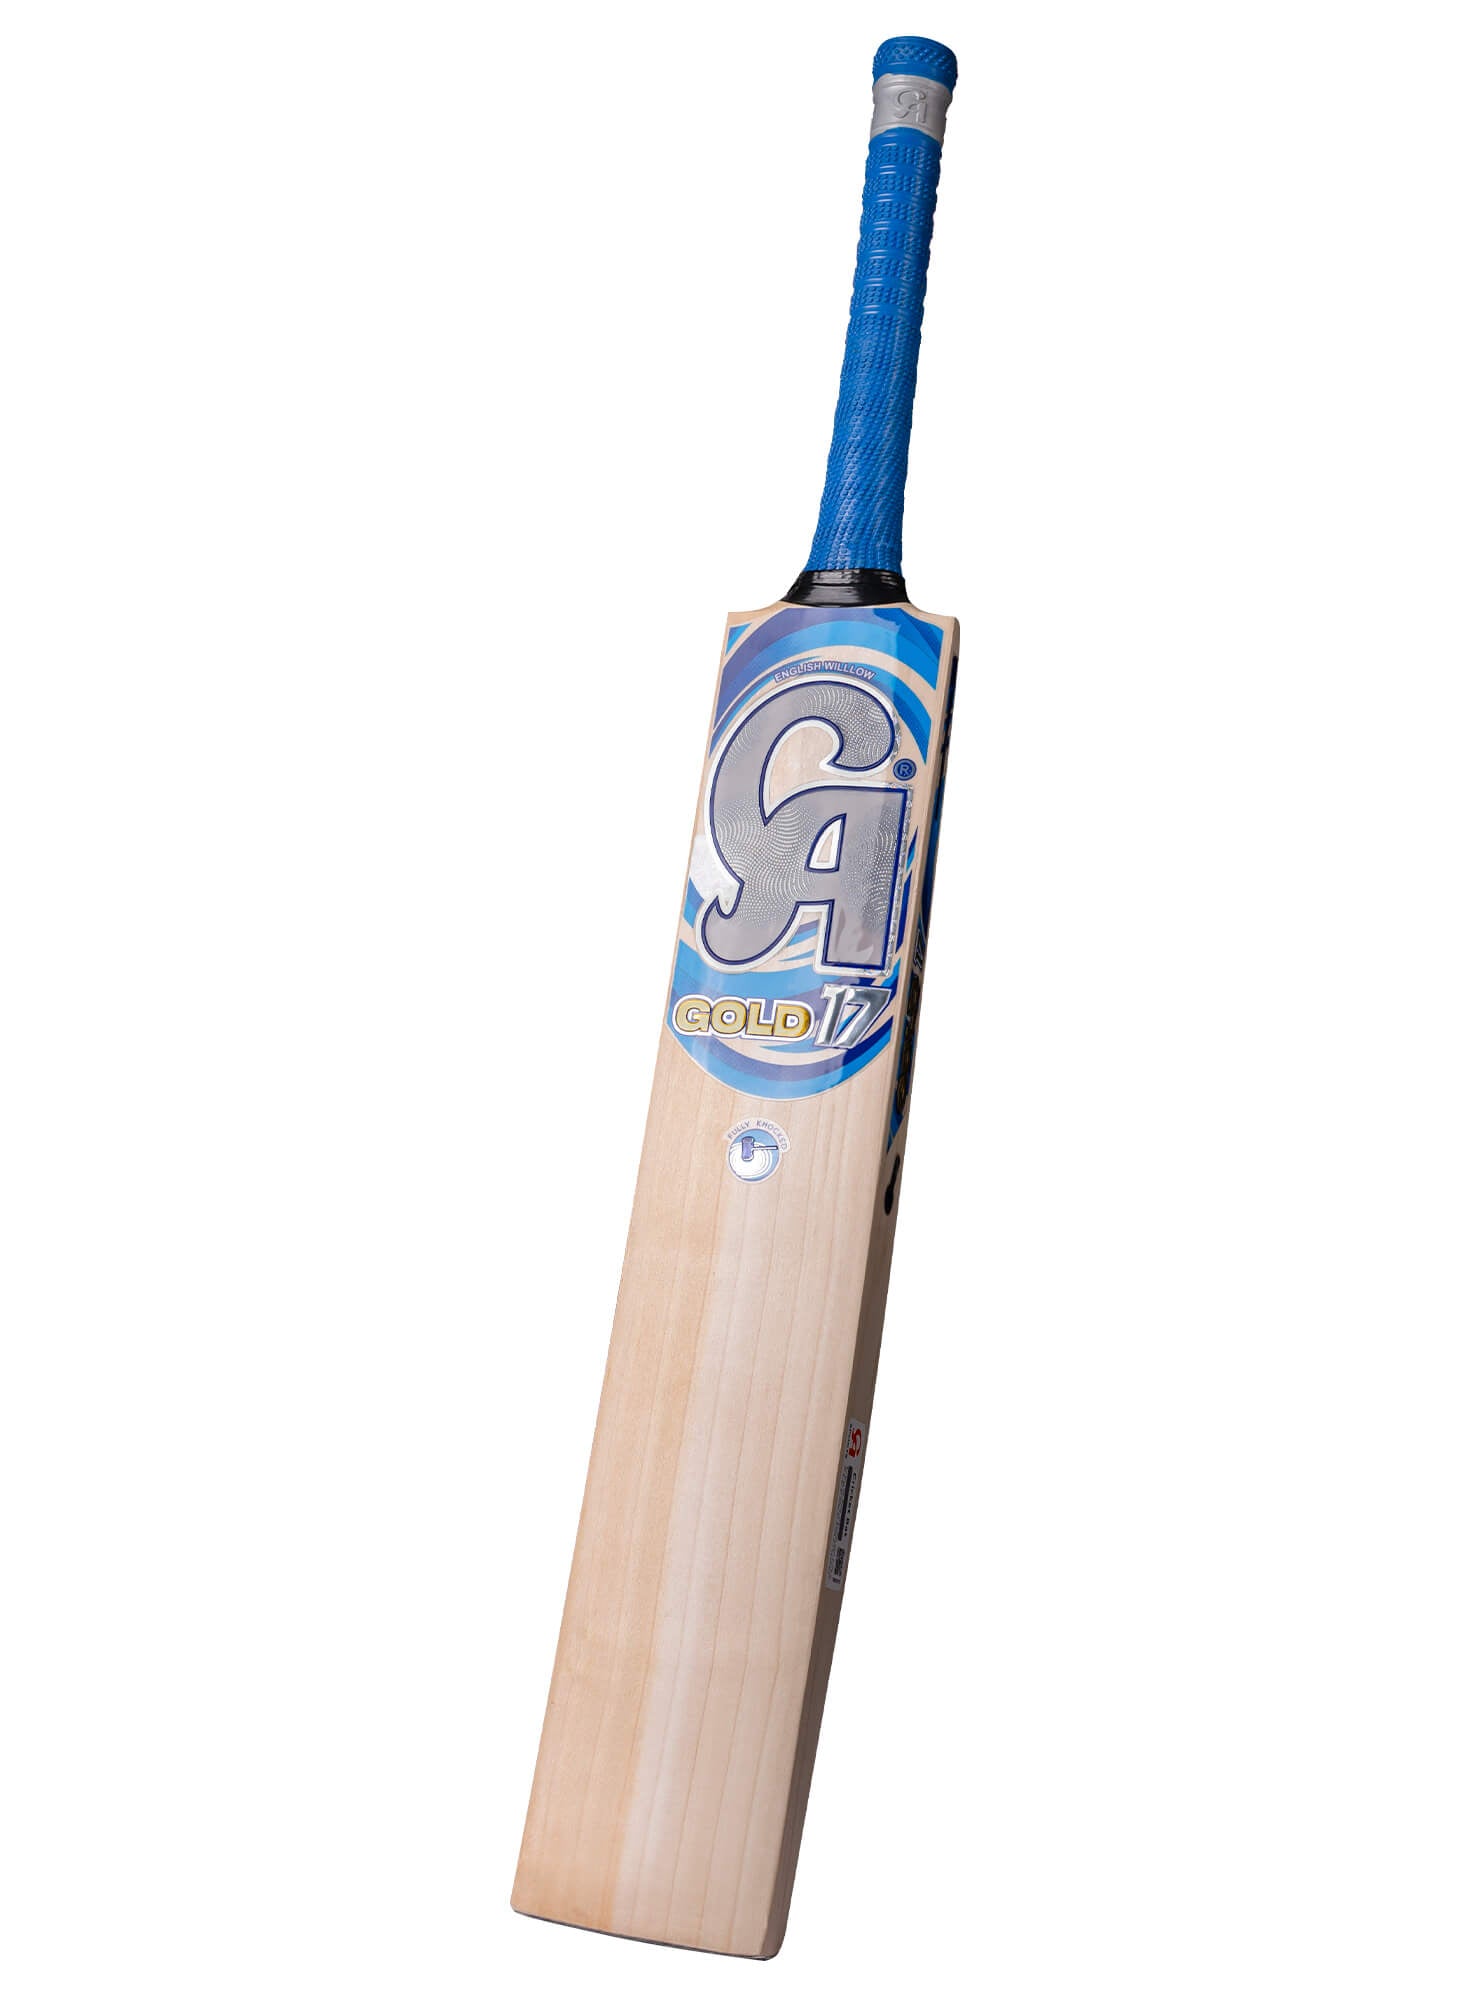 CA Gold 17 English Willow Cricket Bat -2024